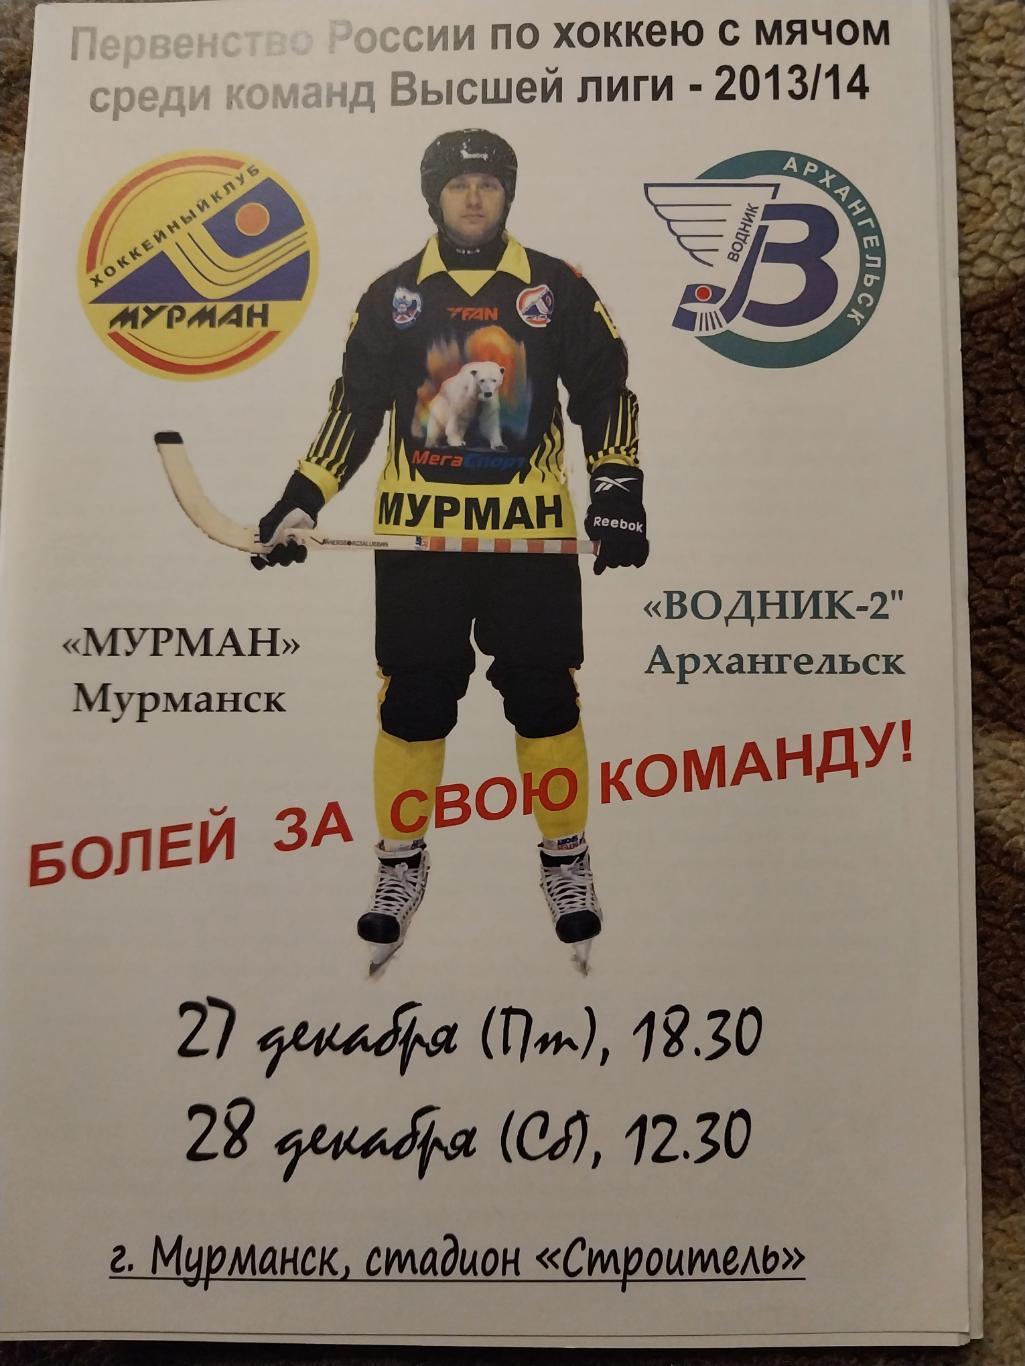 Мурман (Мурманск) - Водник-2 (Архангельск) 27-28.12.2013